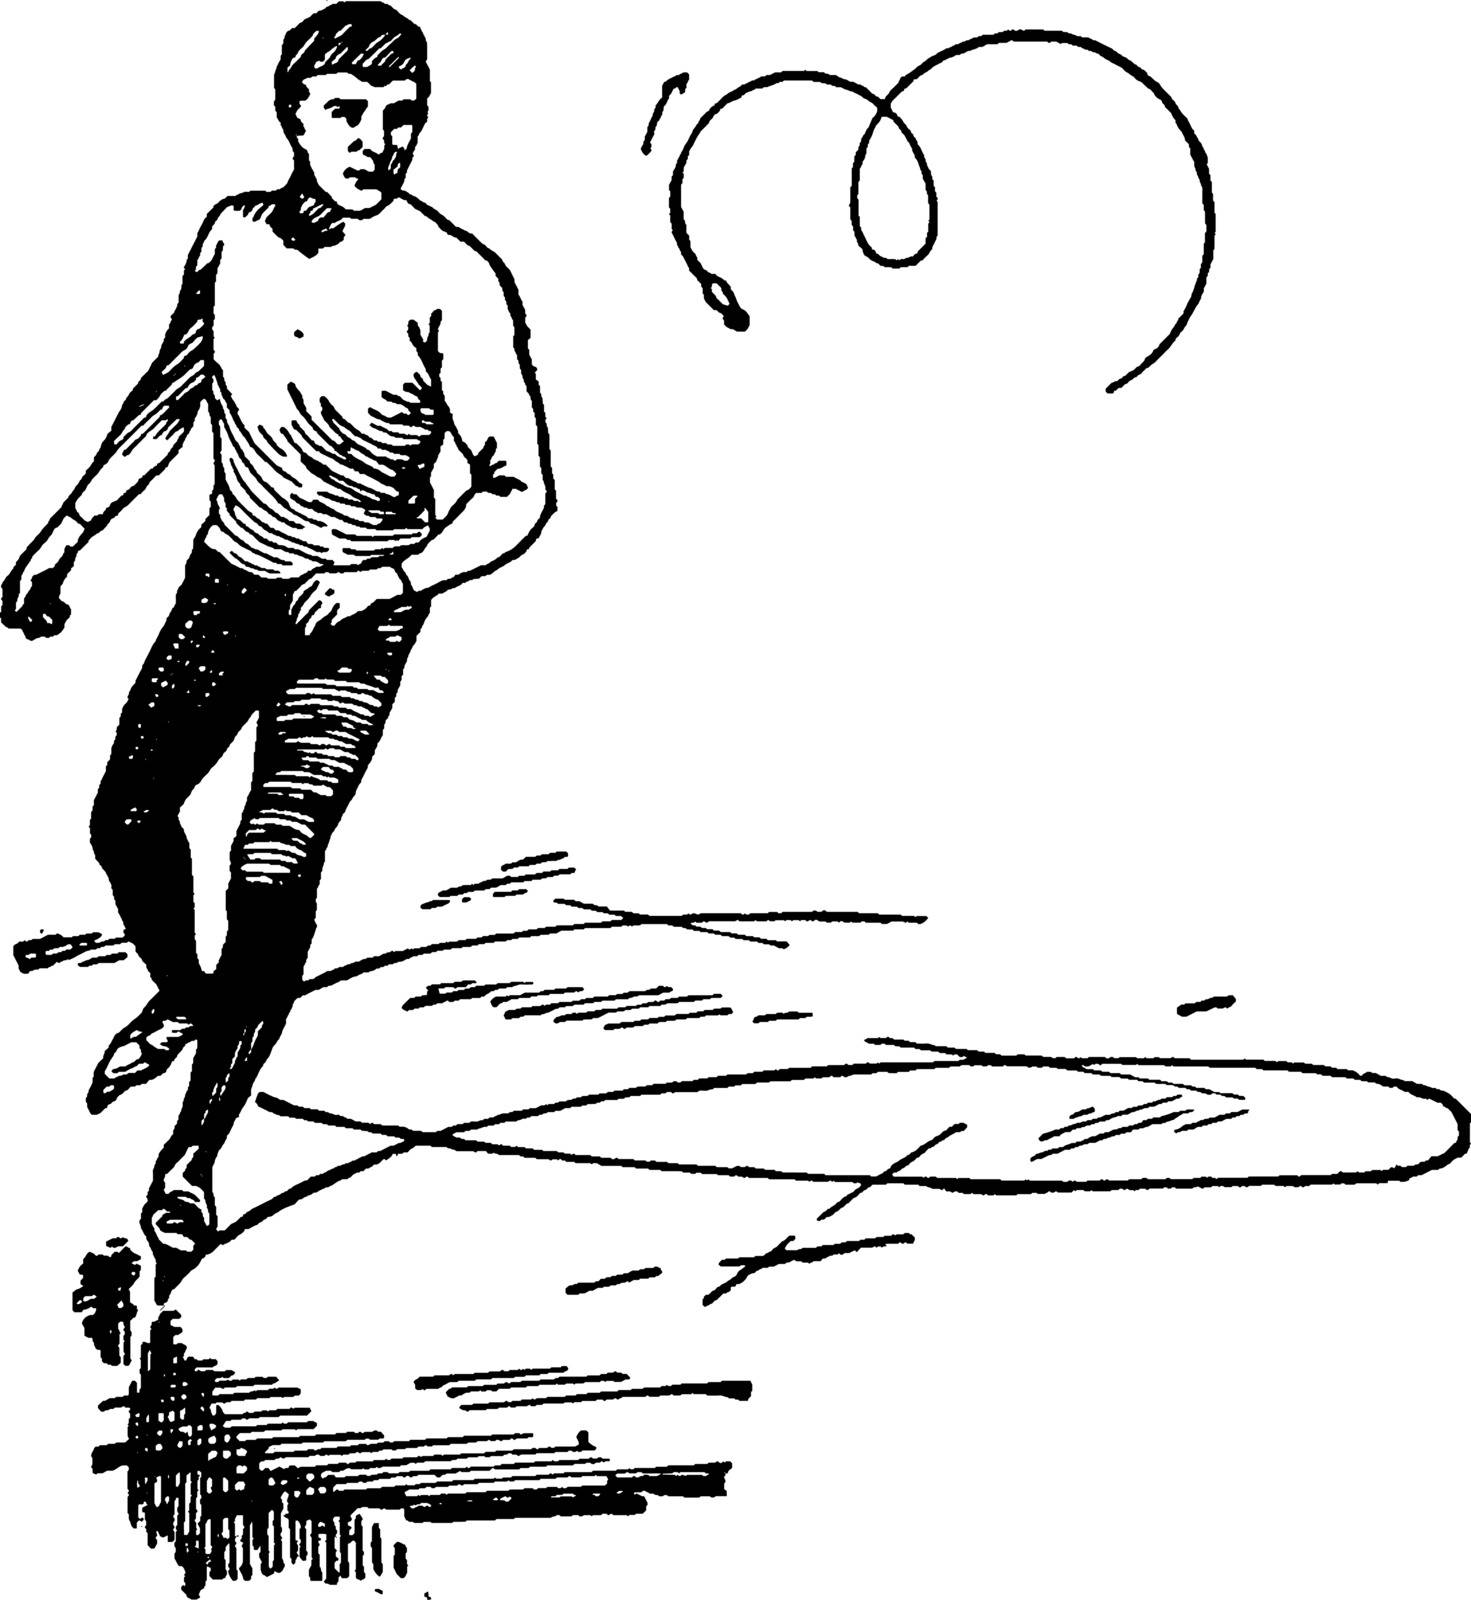 Skating Loop figure vintage illustration.  by Morphart